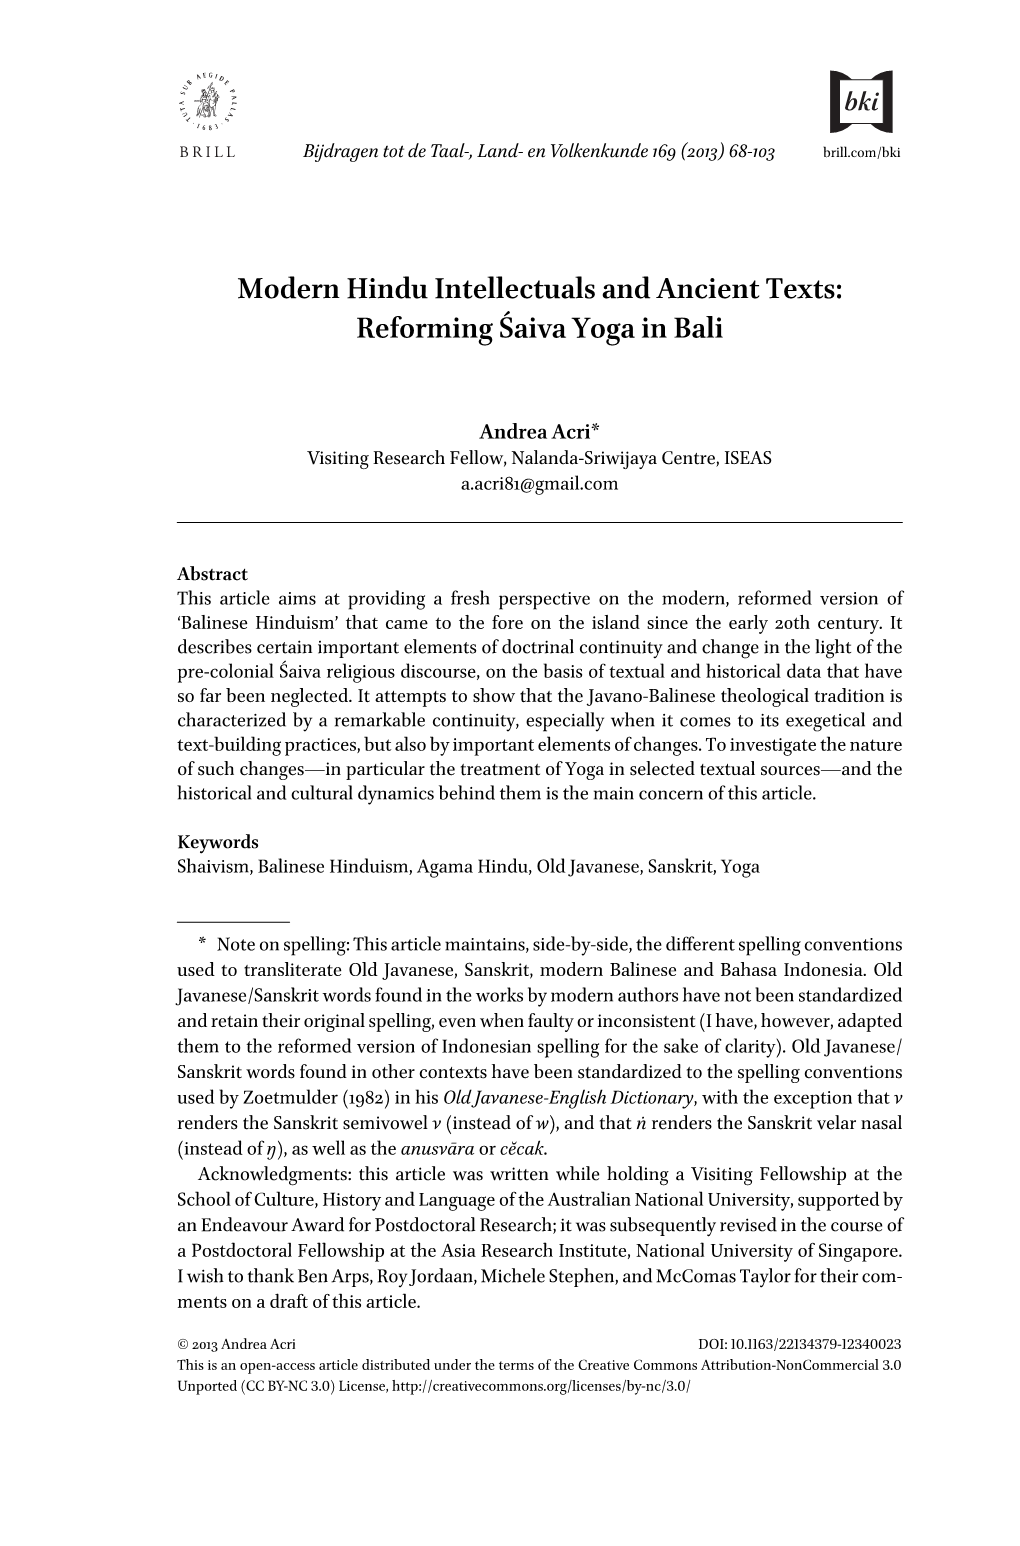 Modern Hindu Intellectuals and Ancient Texts: Reforming Śaiva Yoga in Bali